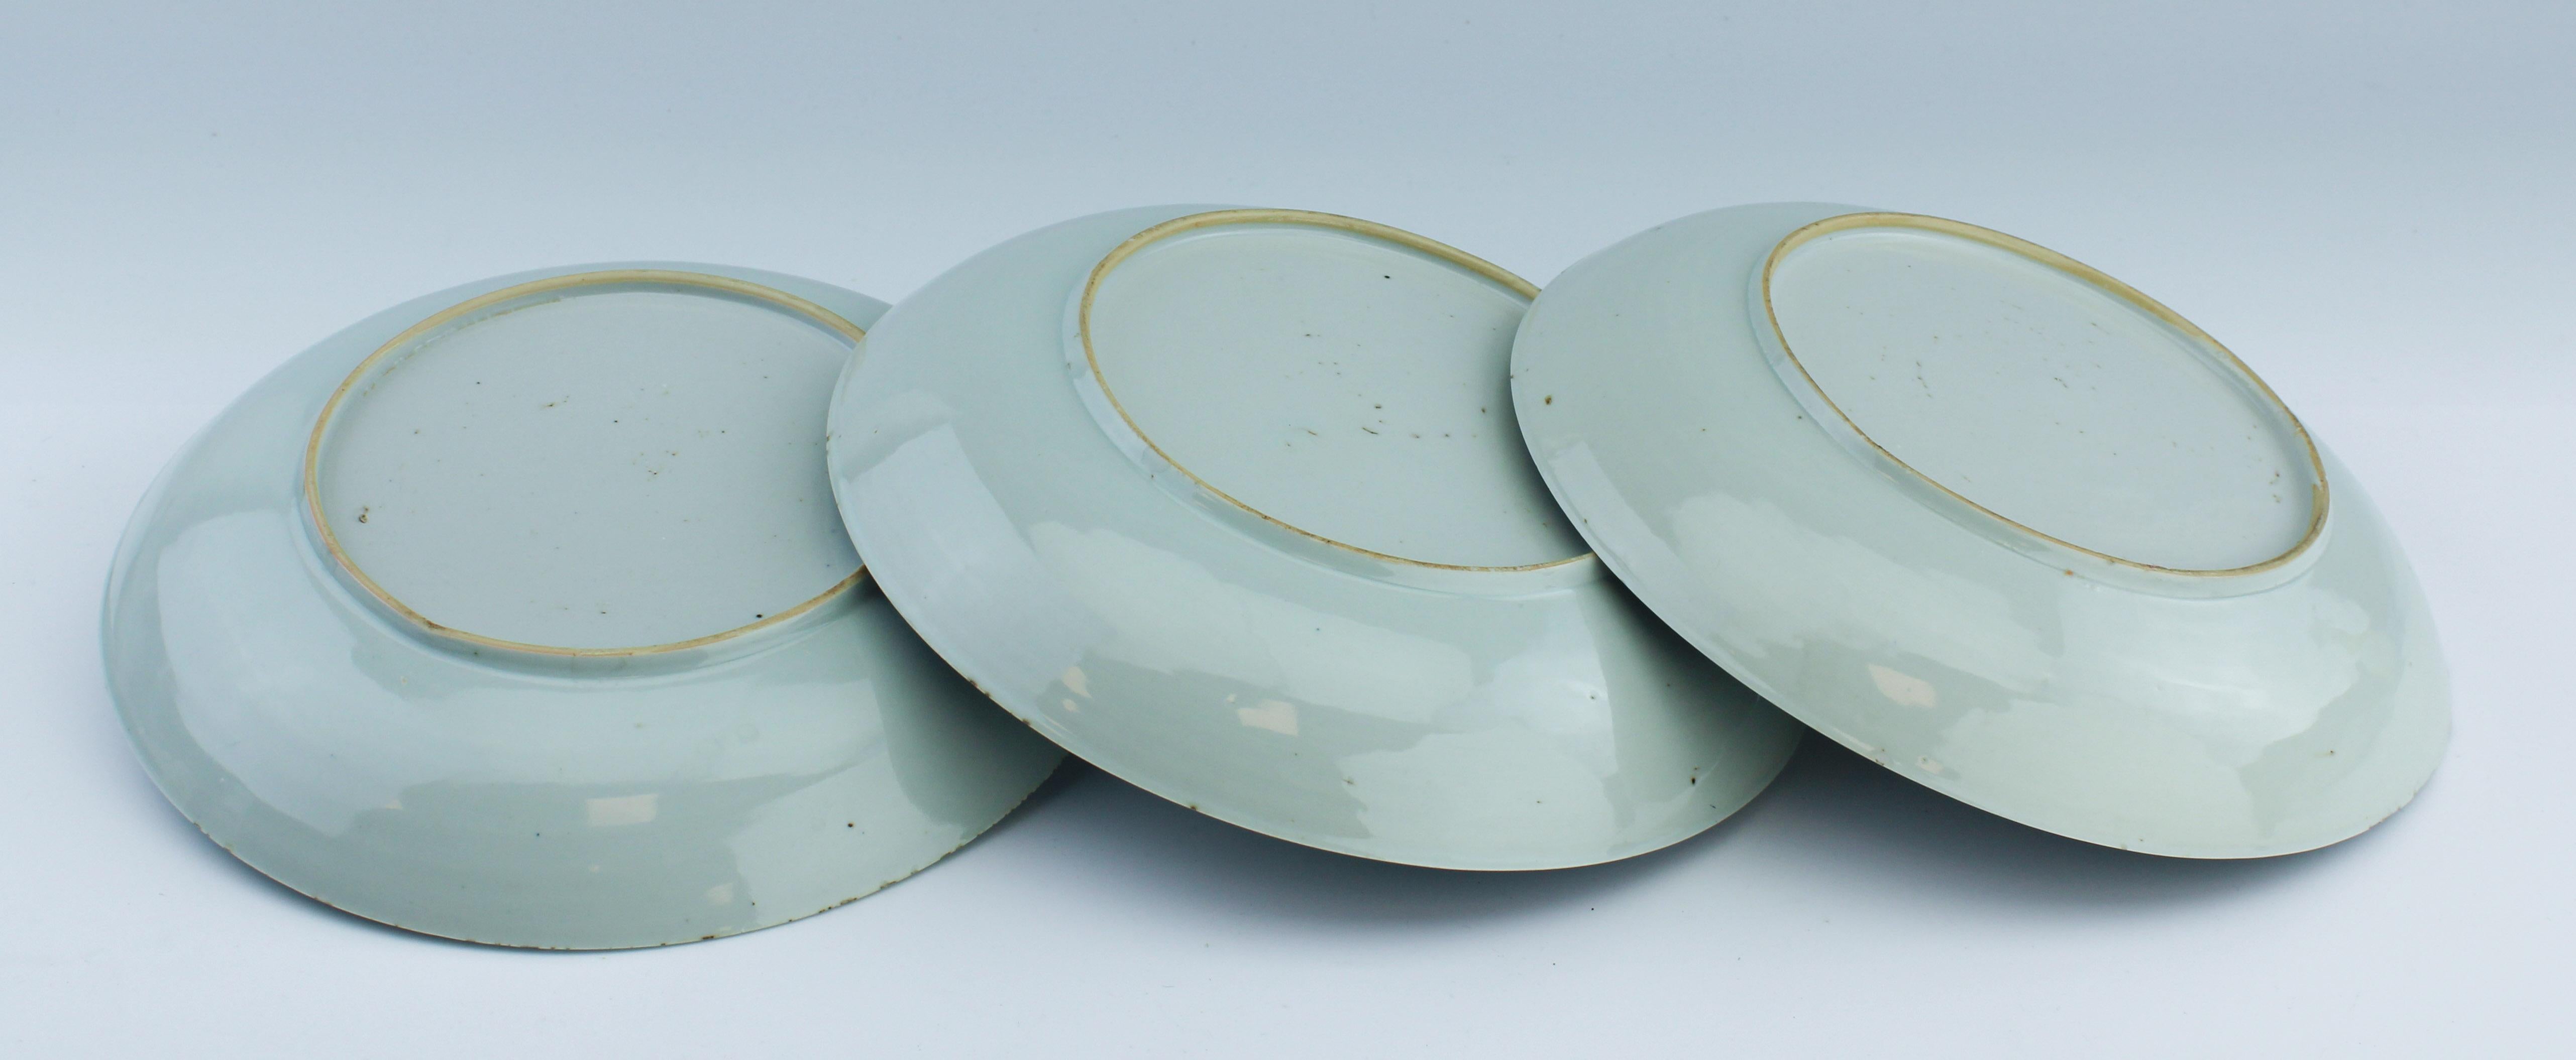 Porcelaine Table n°10 en porcelaine chinoise ancienne Yongzheng/Qianlong Kraak bleu et blanc 18e siècle en vente